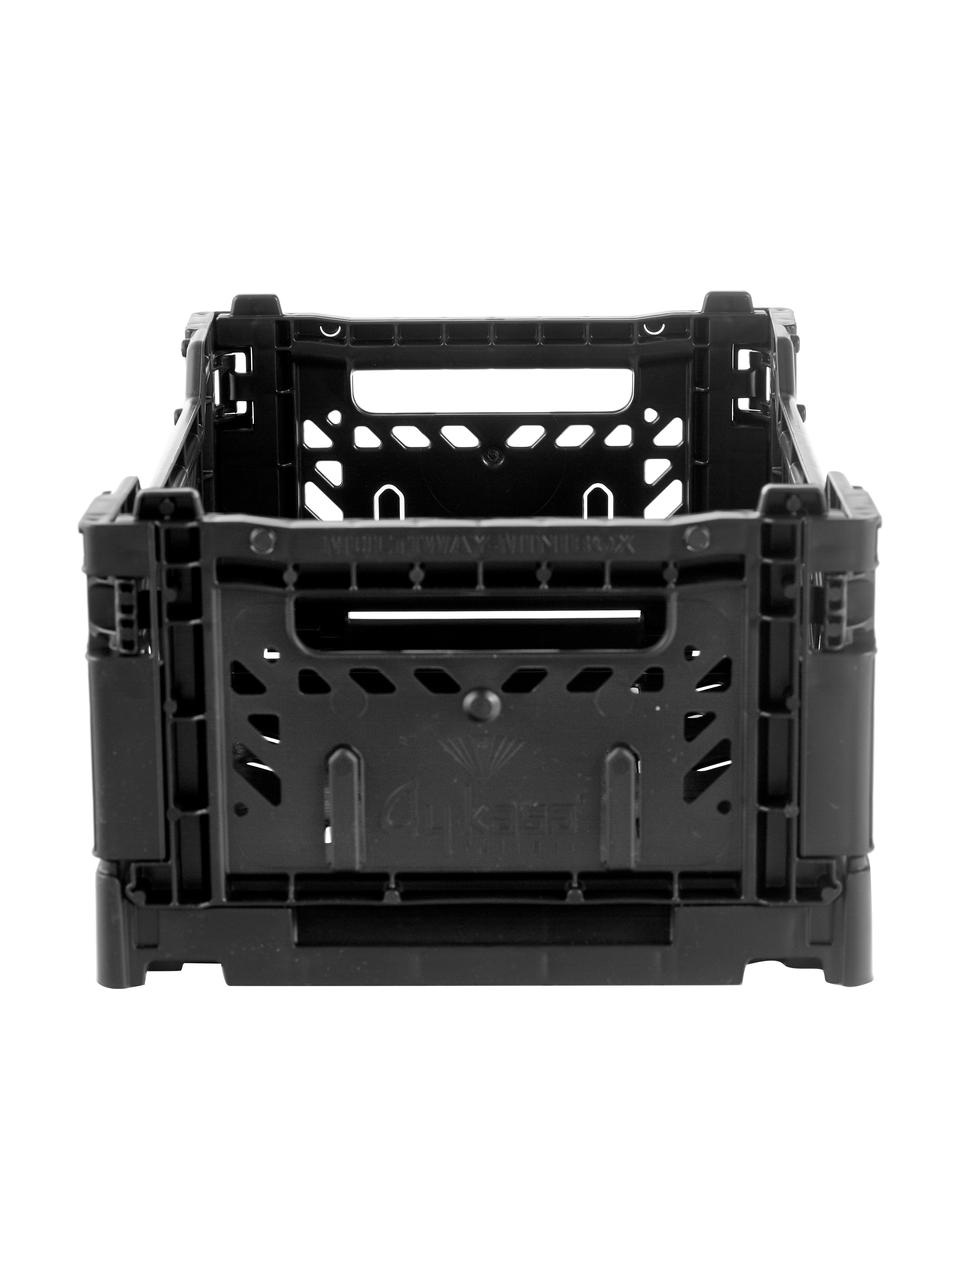 Malý skládací box Black, Umělá hmota, Černá, Š 27 cm, V 11 cm